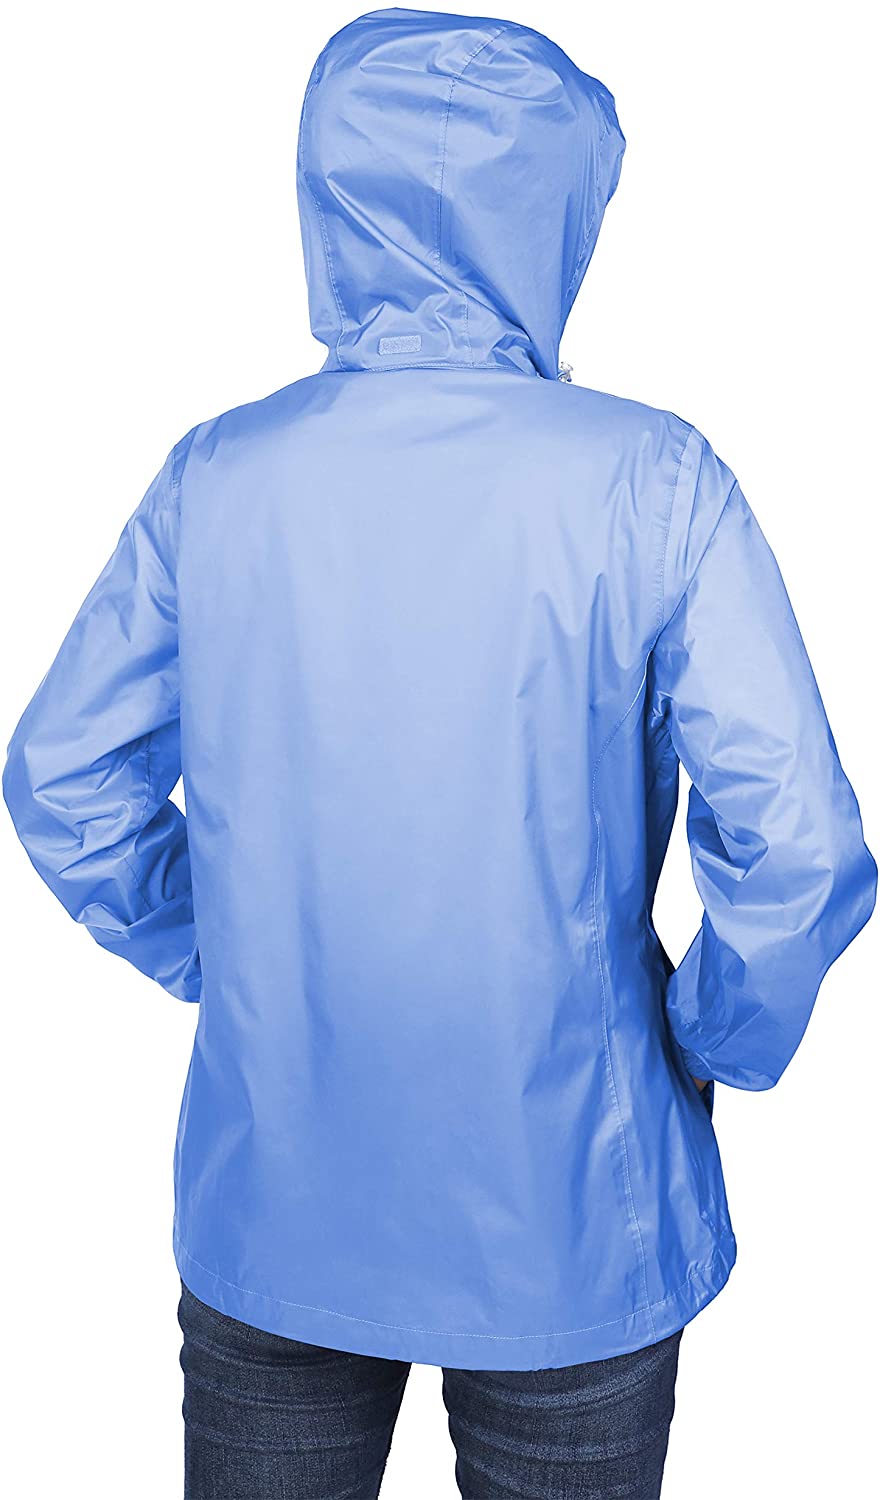 white Waterproof Rain Jacket